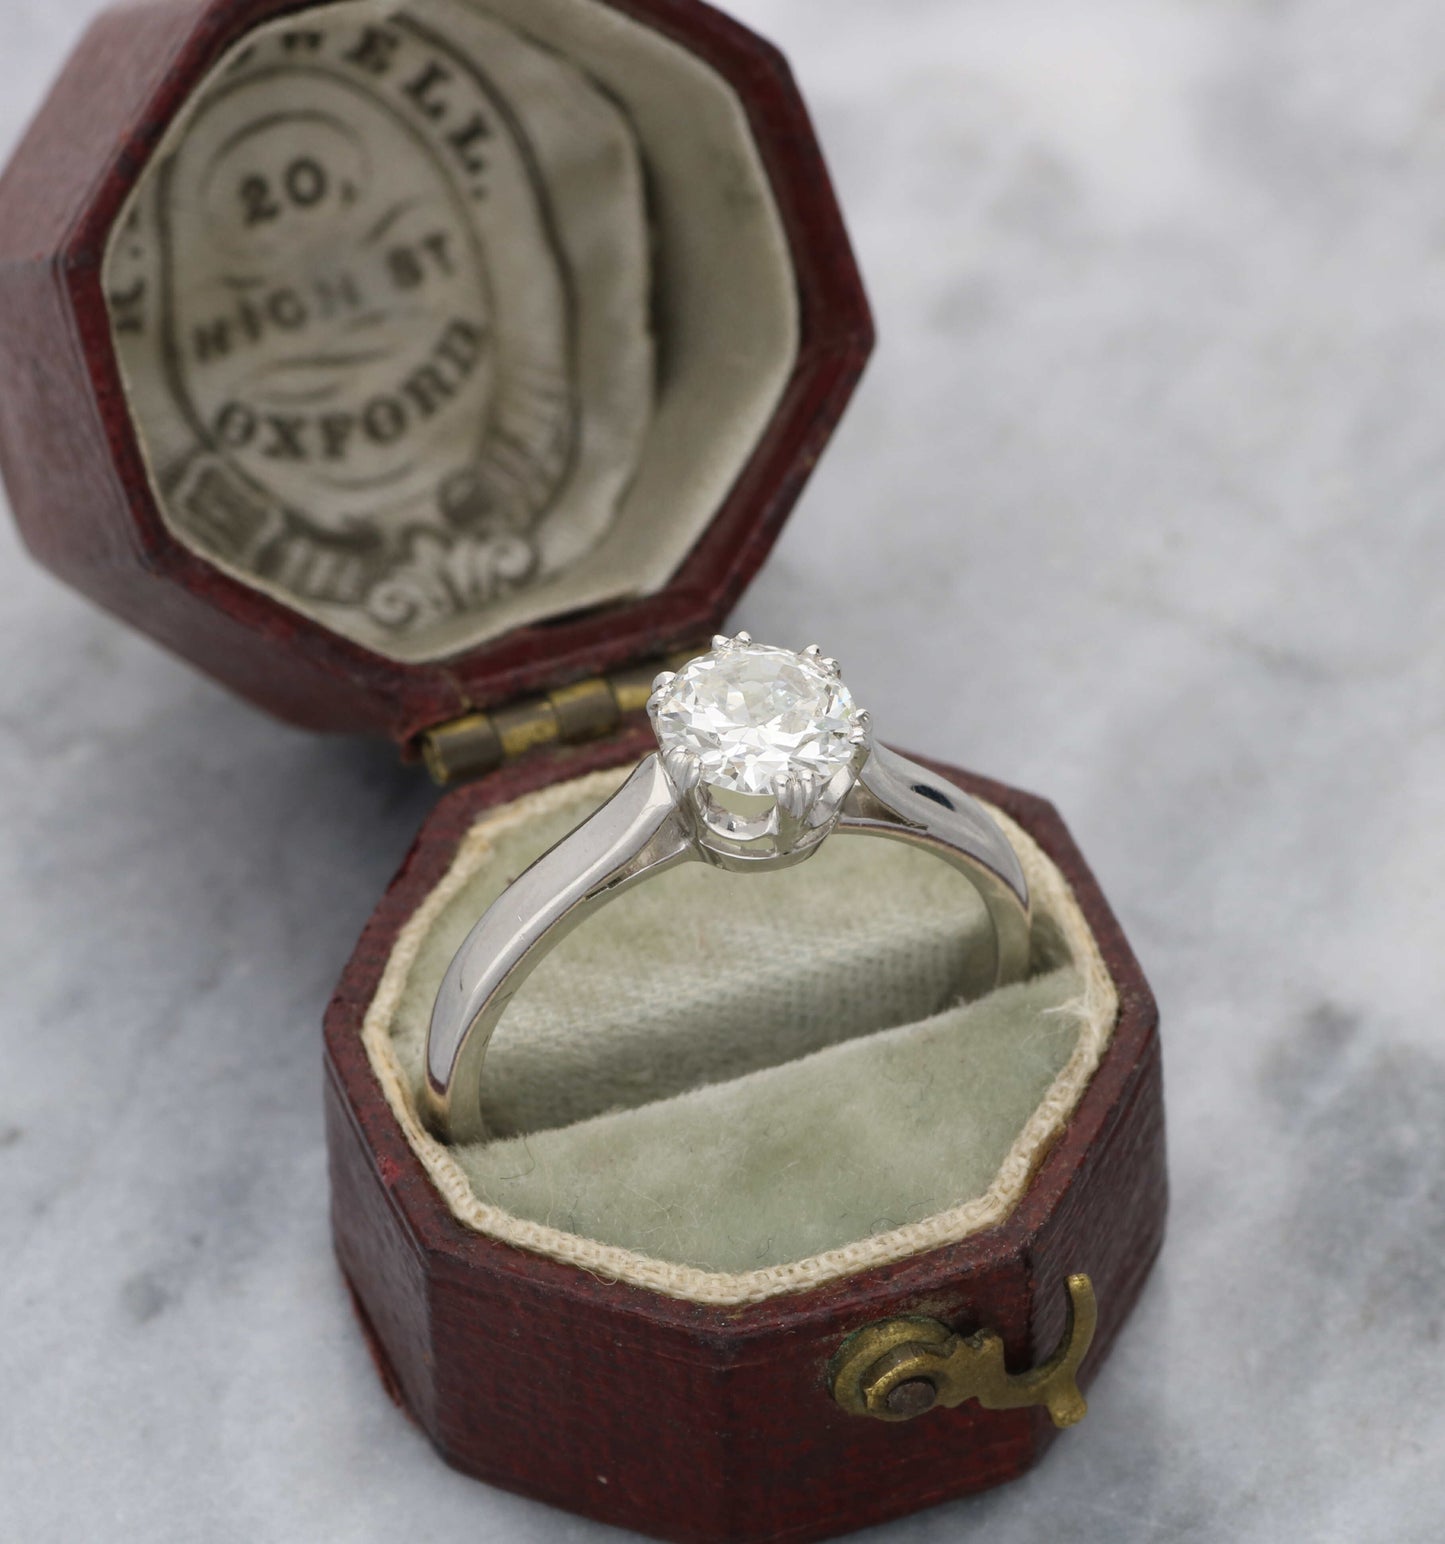 Platinum old cut diamond solitaire engagement ring